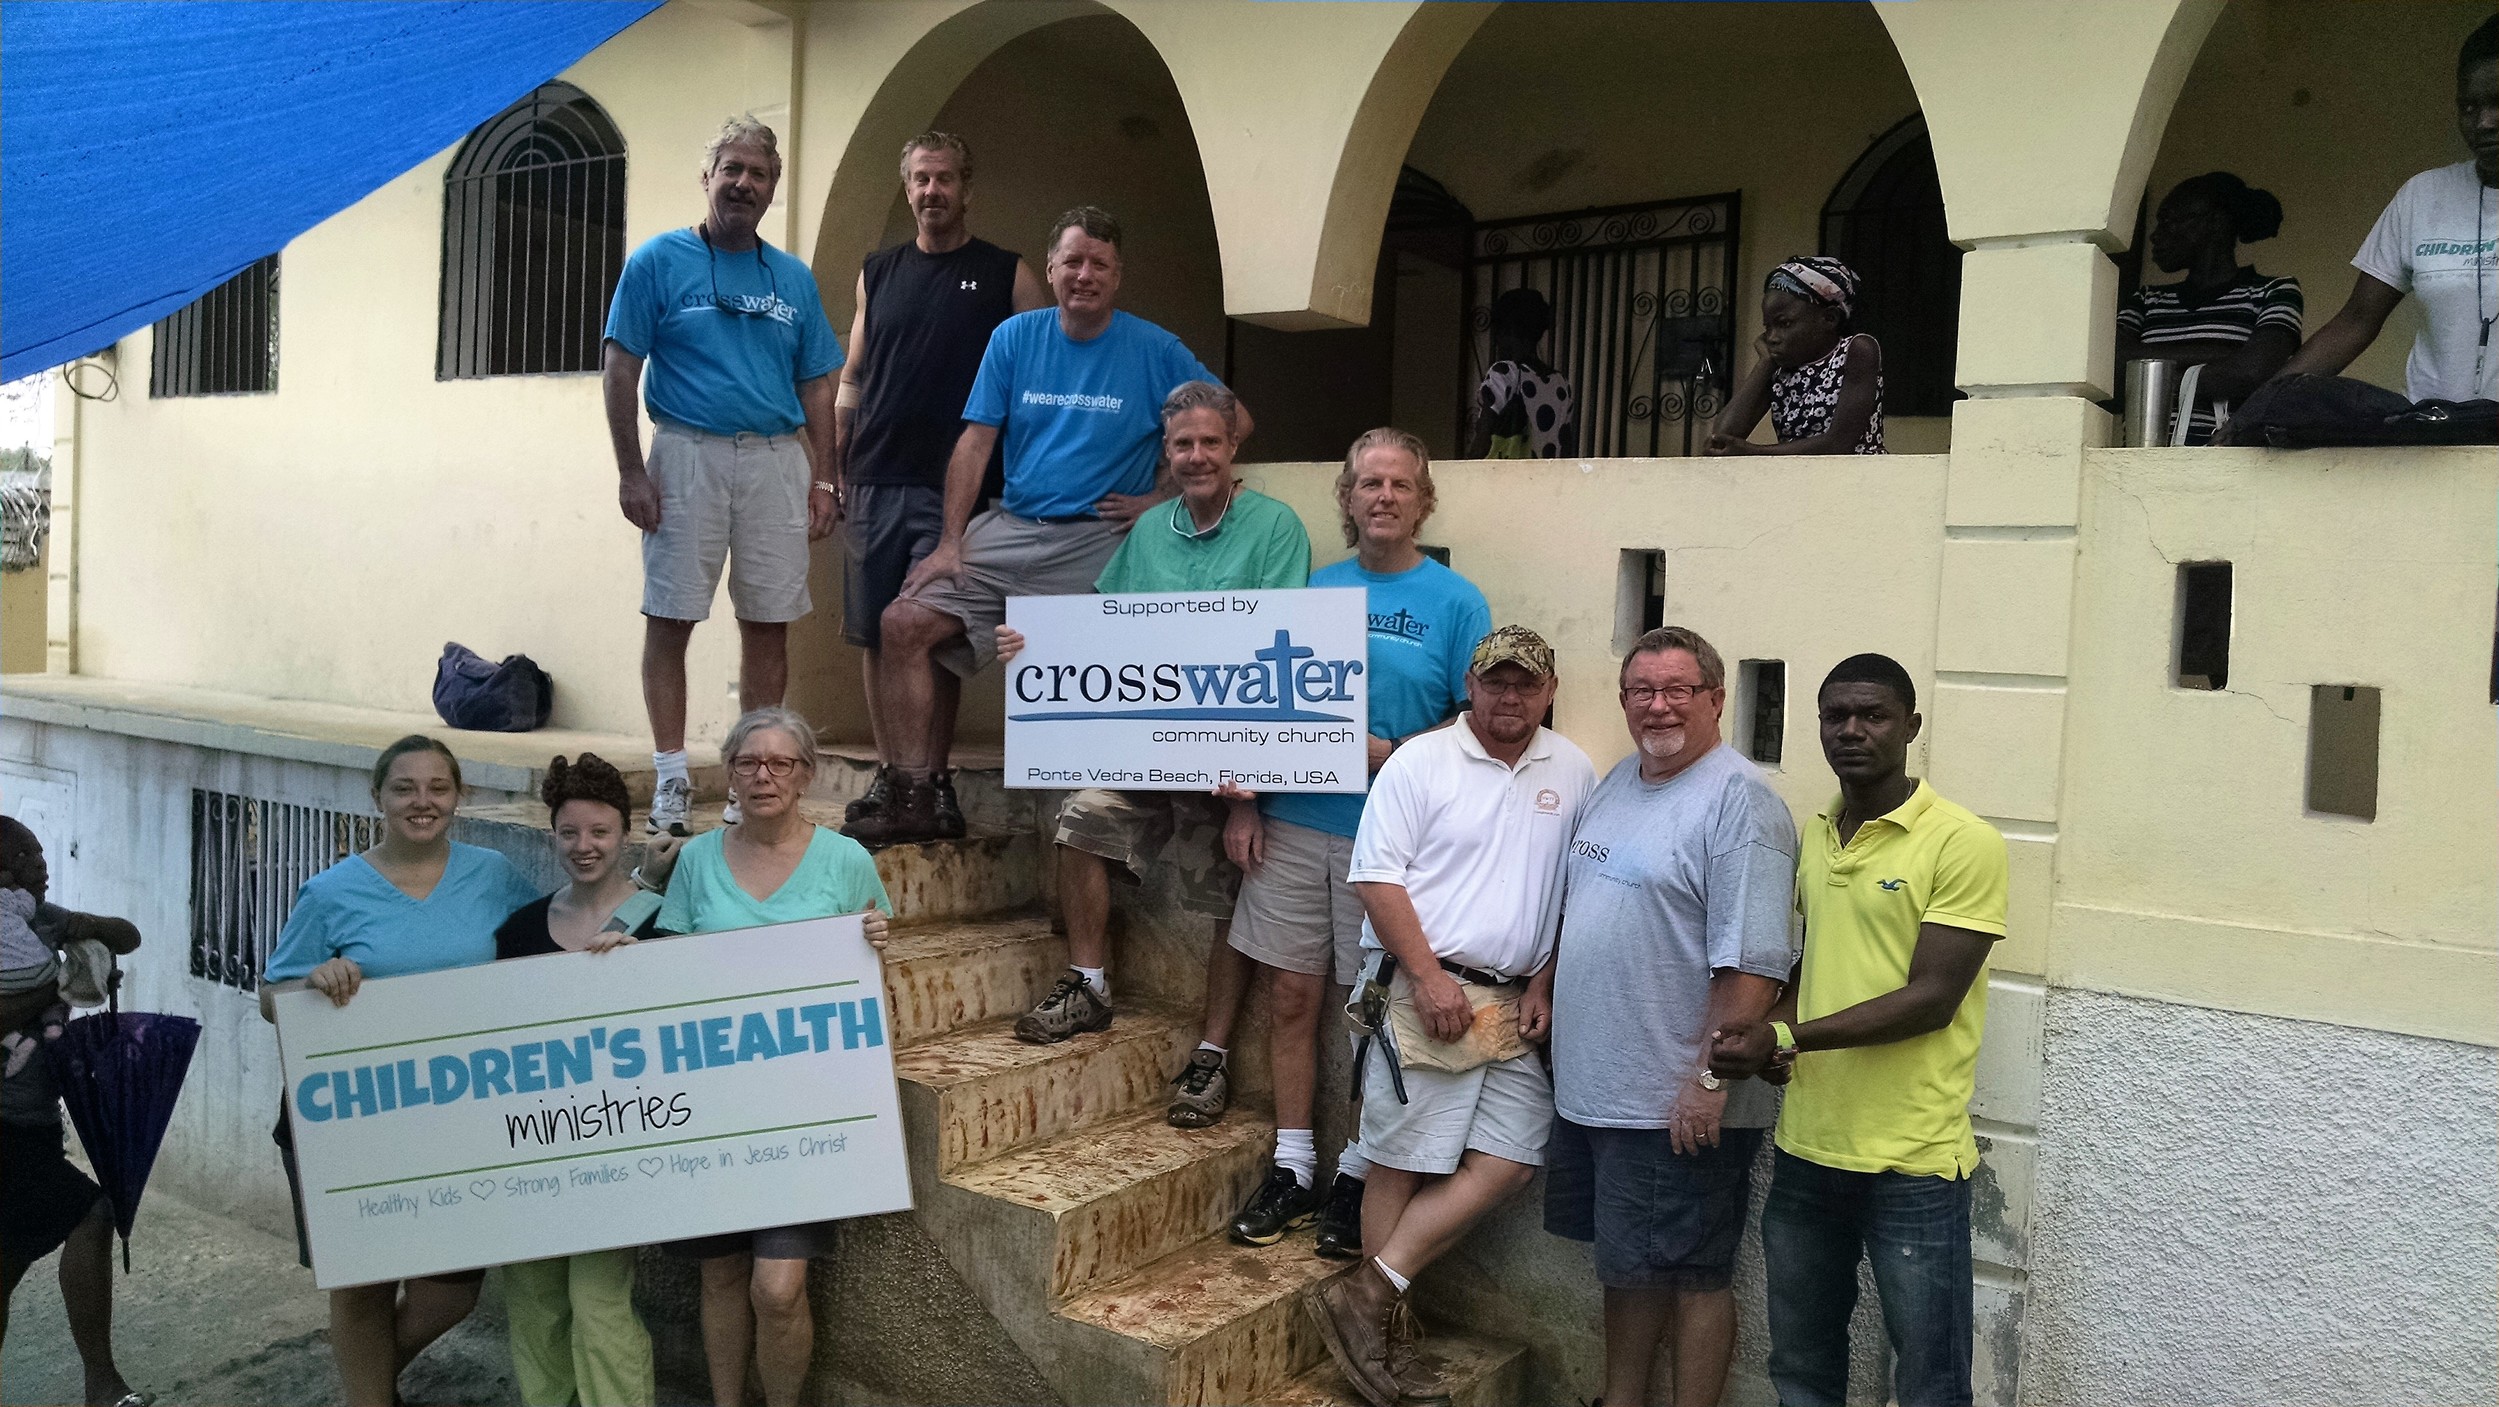 Crosswater team members included Senior Pastor Jack Millwood, Adult Pastor George Powers, Dr. Scott Covington, Dr. Ken Hagan, David Hiden, Mike Lore and Blake Deal.